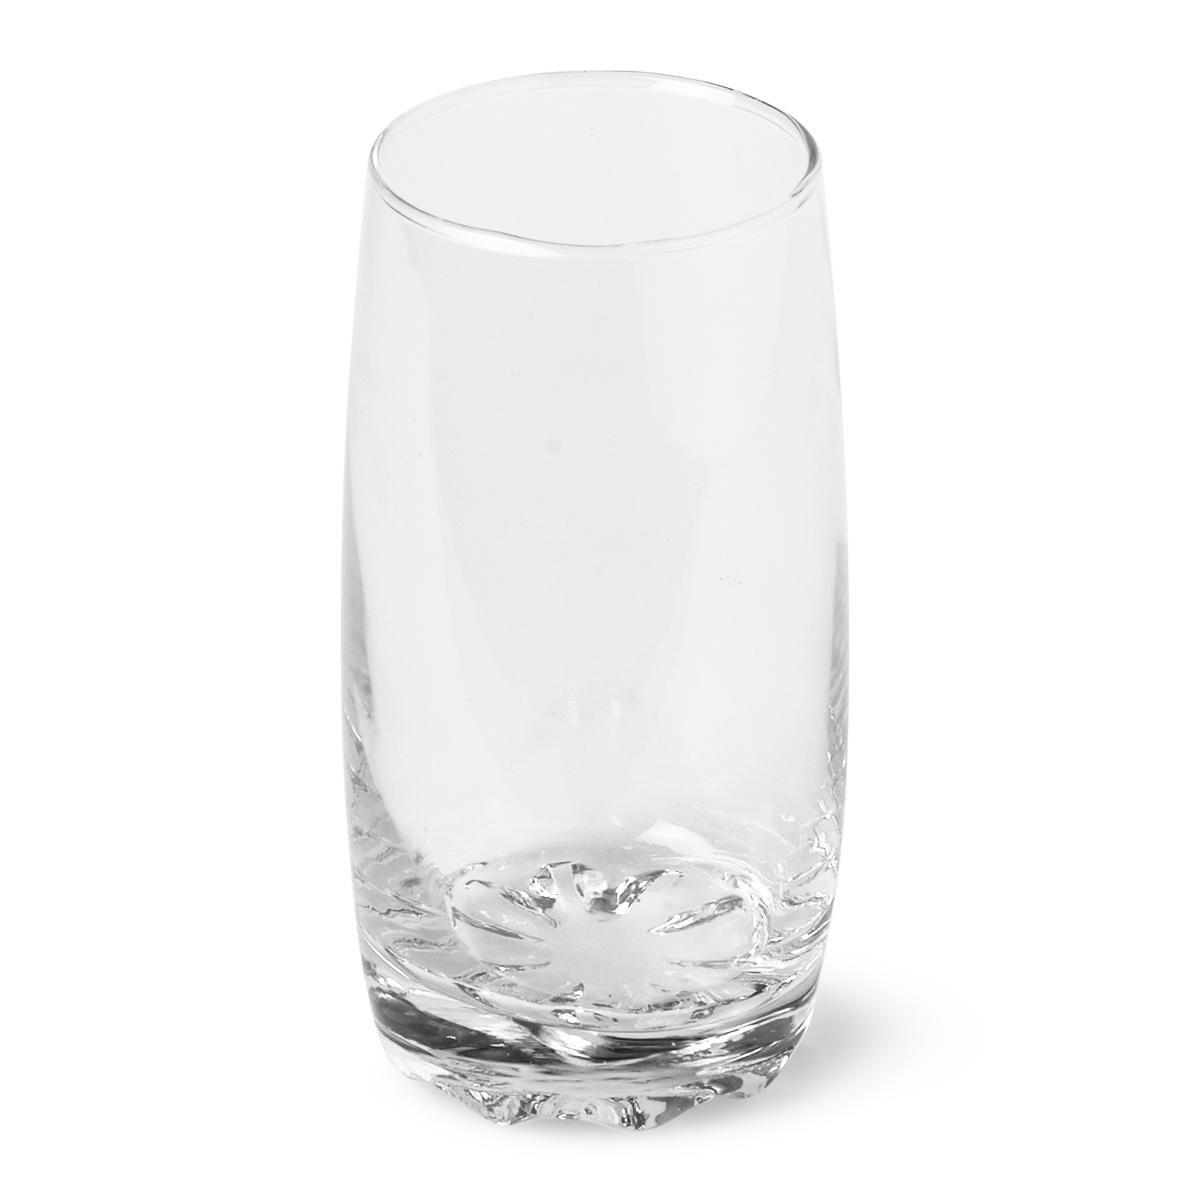 Transparent drinking glass. 14 cm